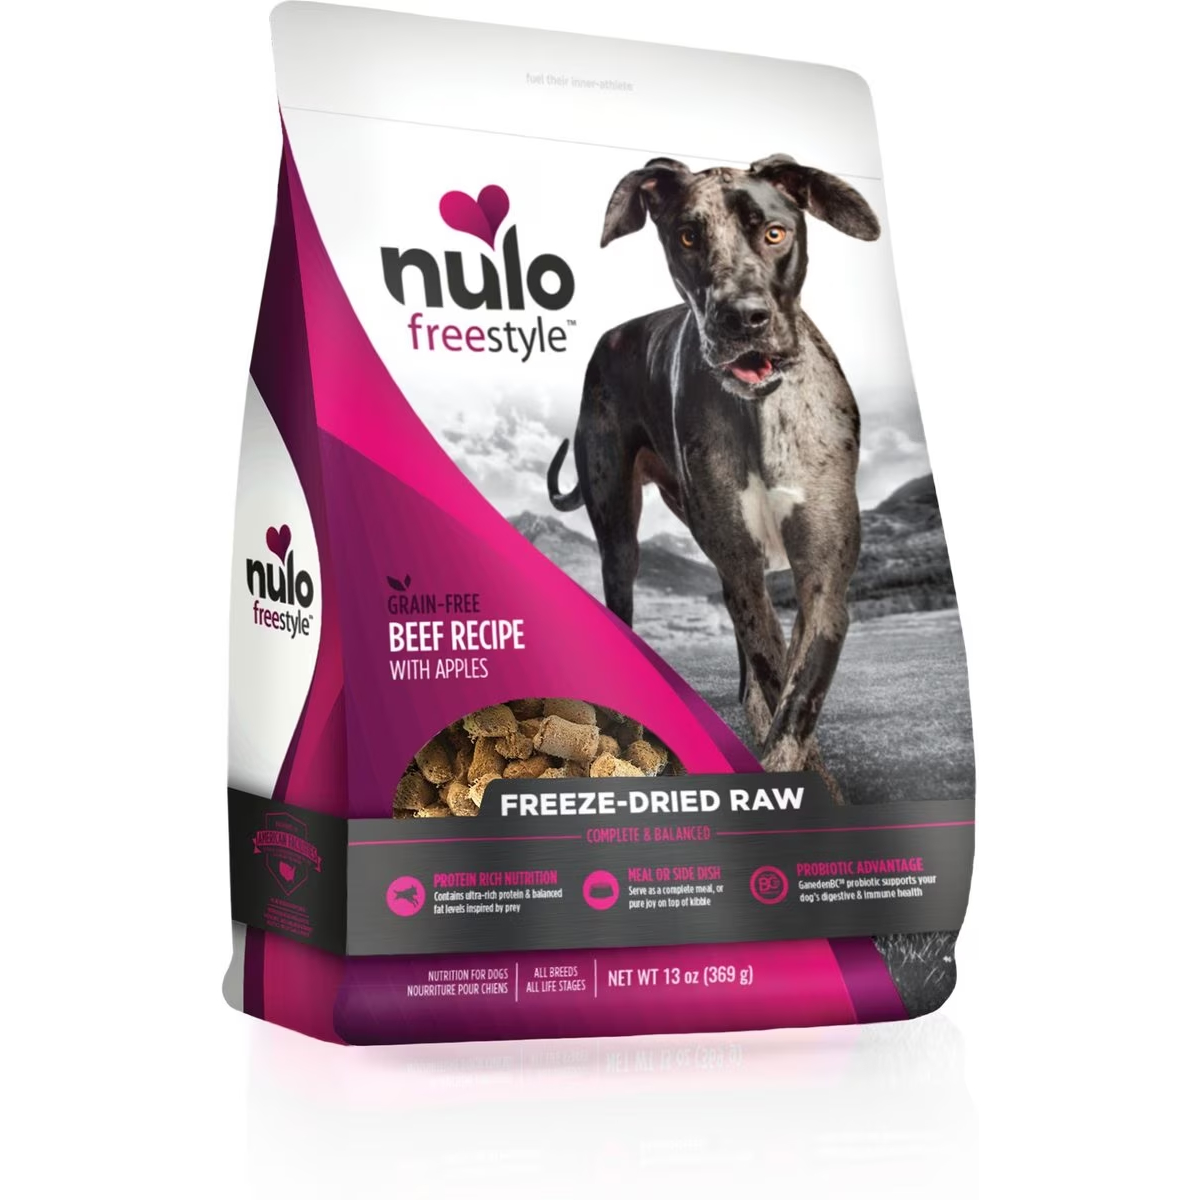 Nulo Freestyle Freeze-Dried Raw Dog Food